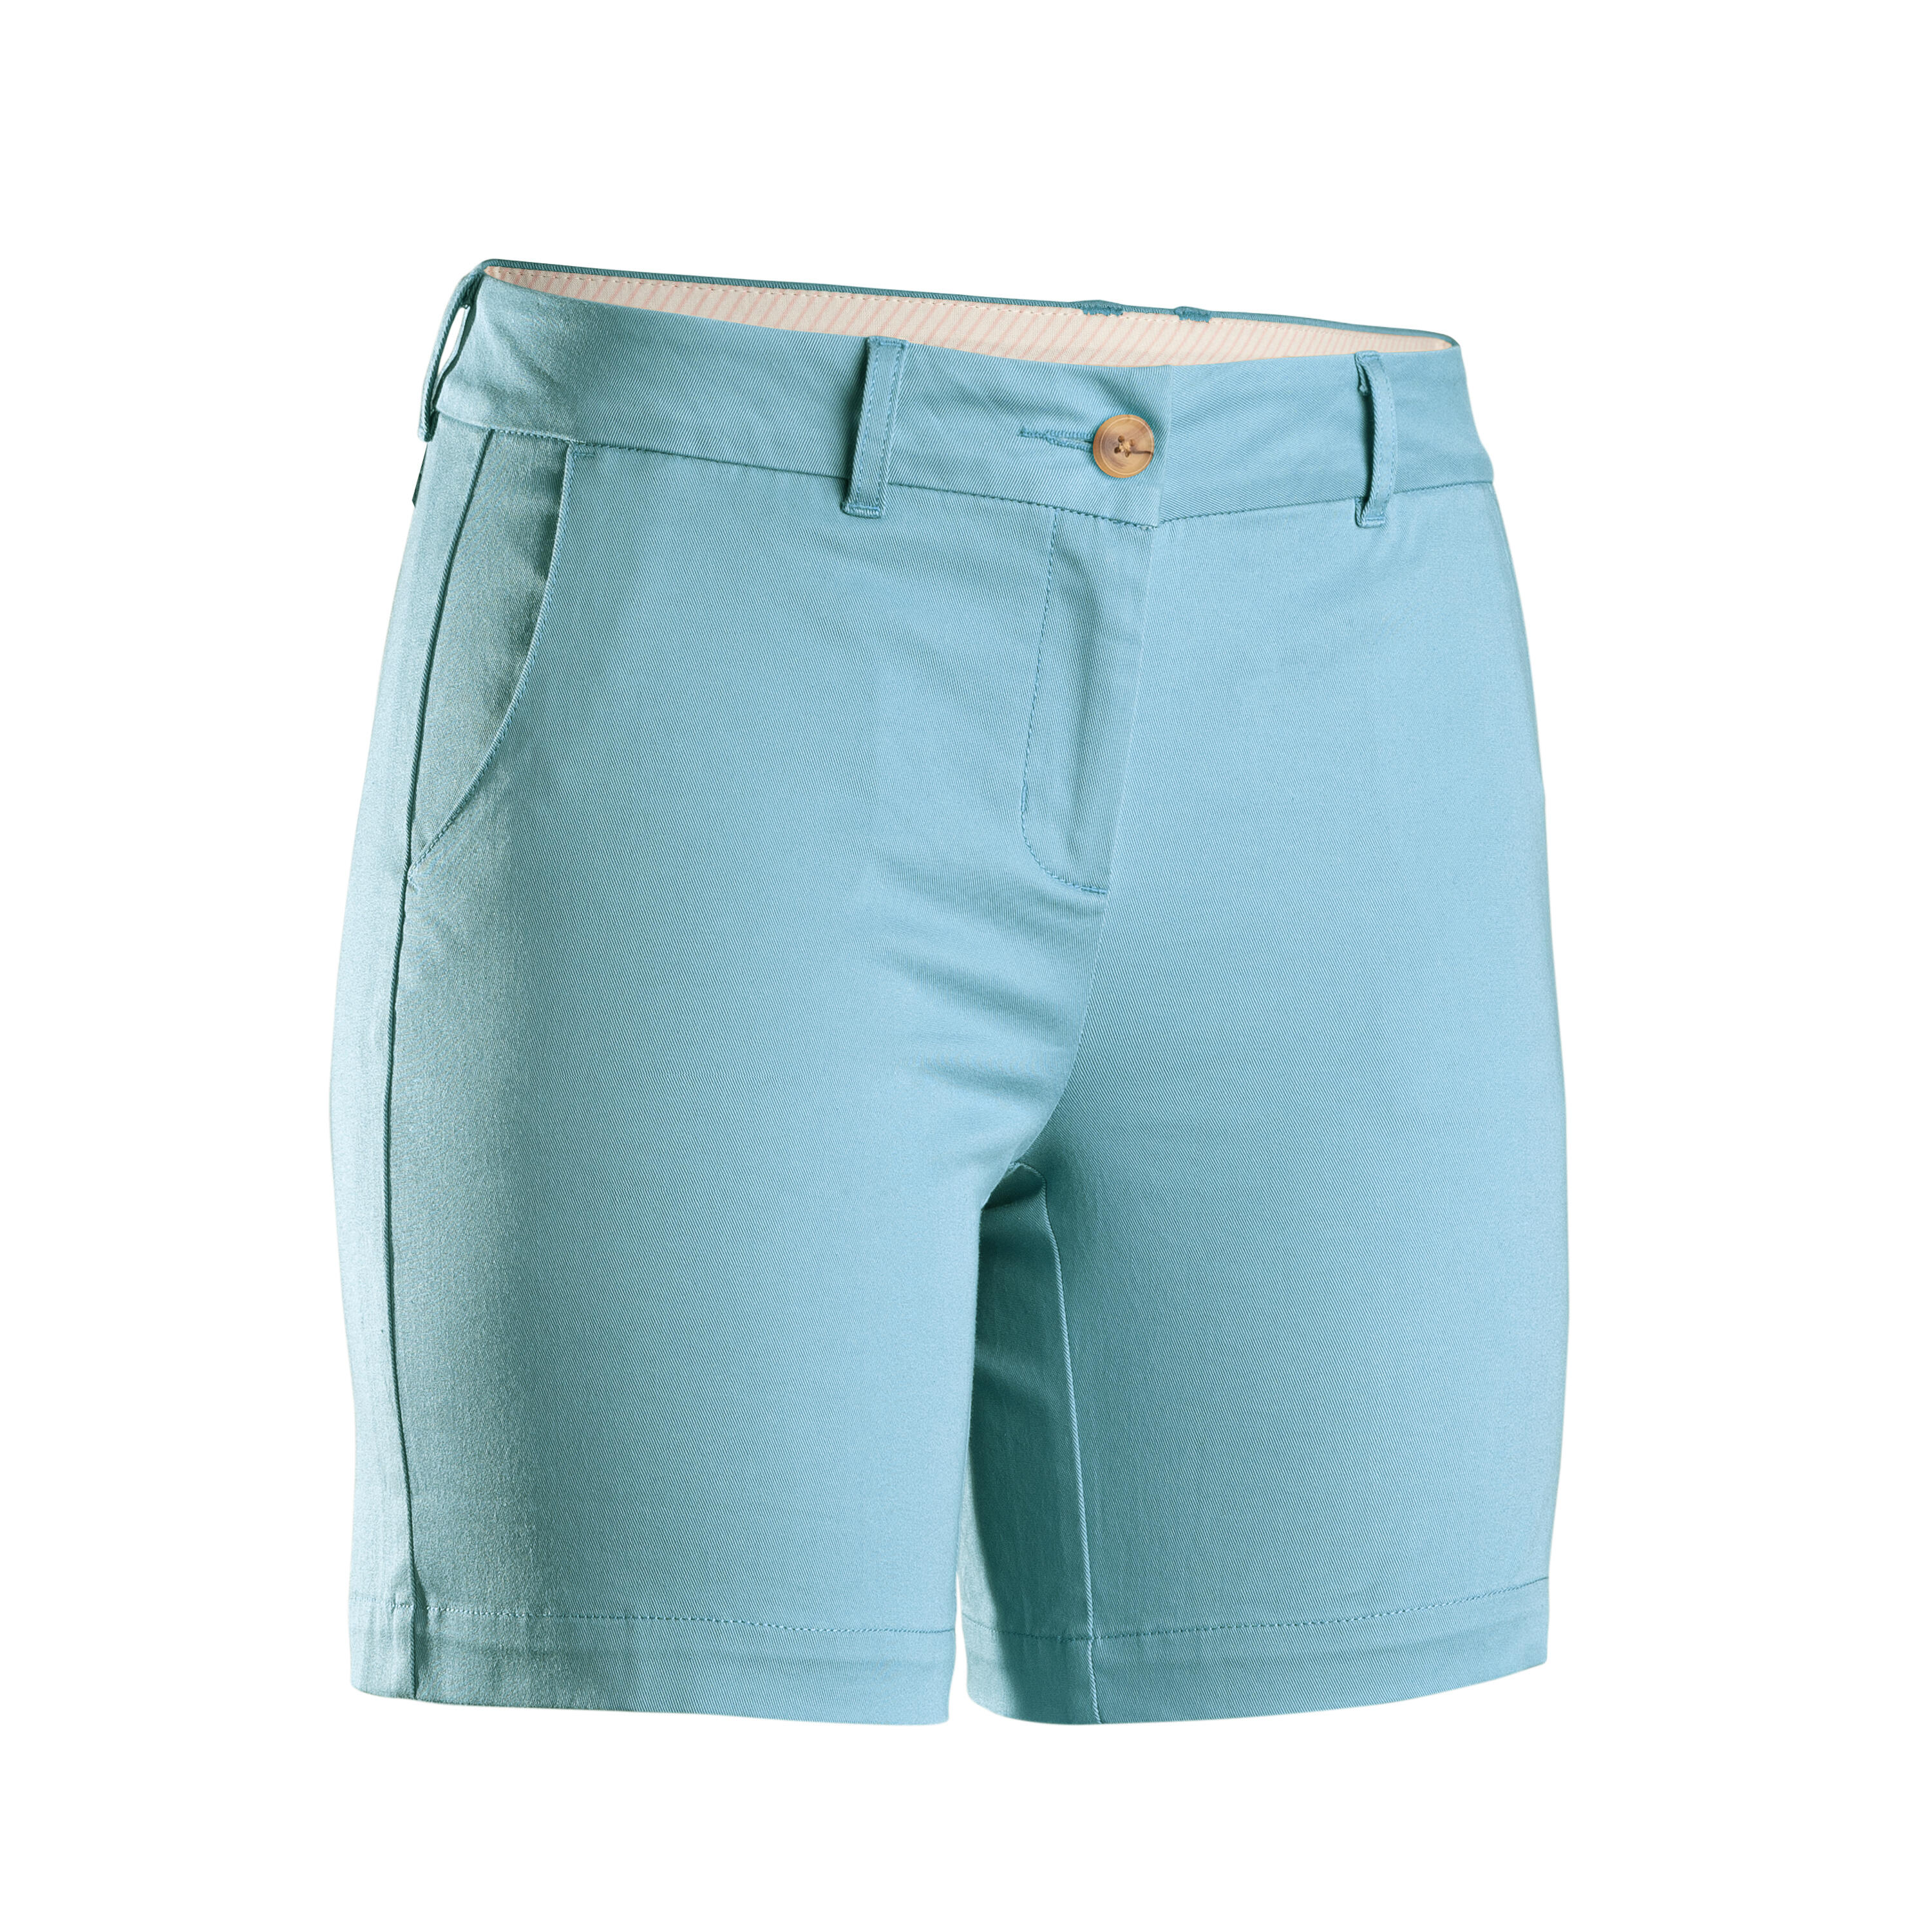 Women's golf chino shorts - MW500 blue grey 8/8